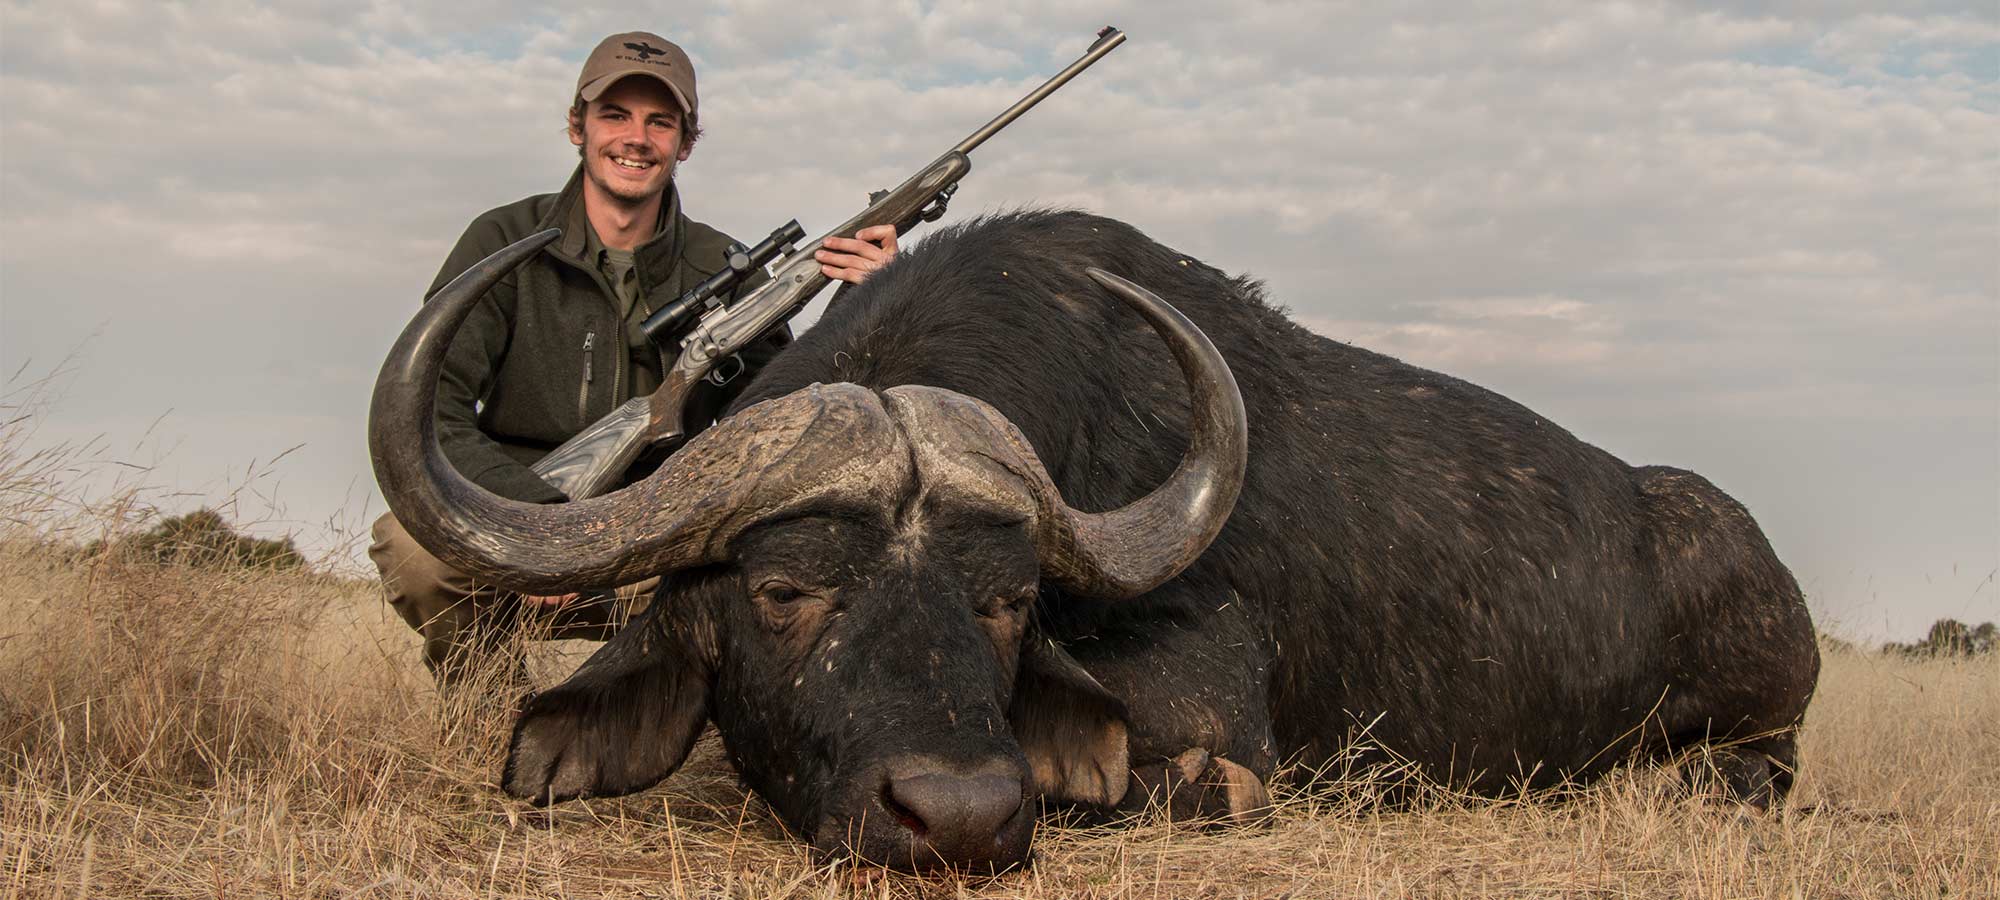 dangerous game rifles hunting ox